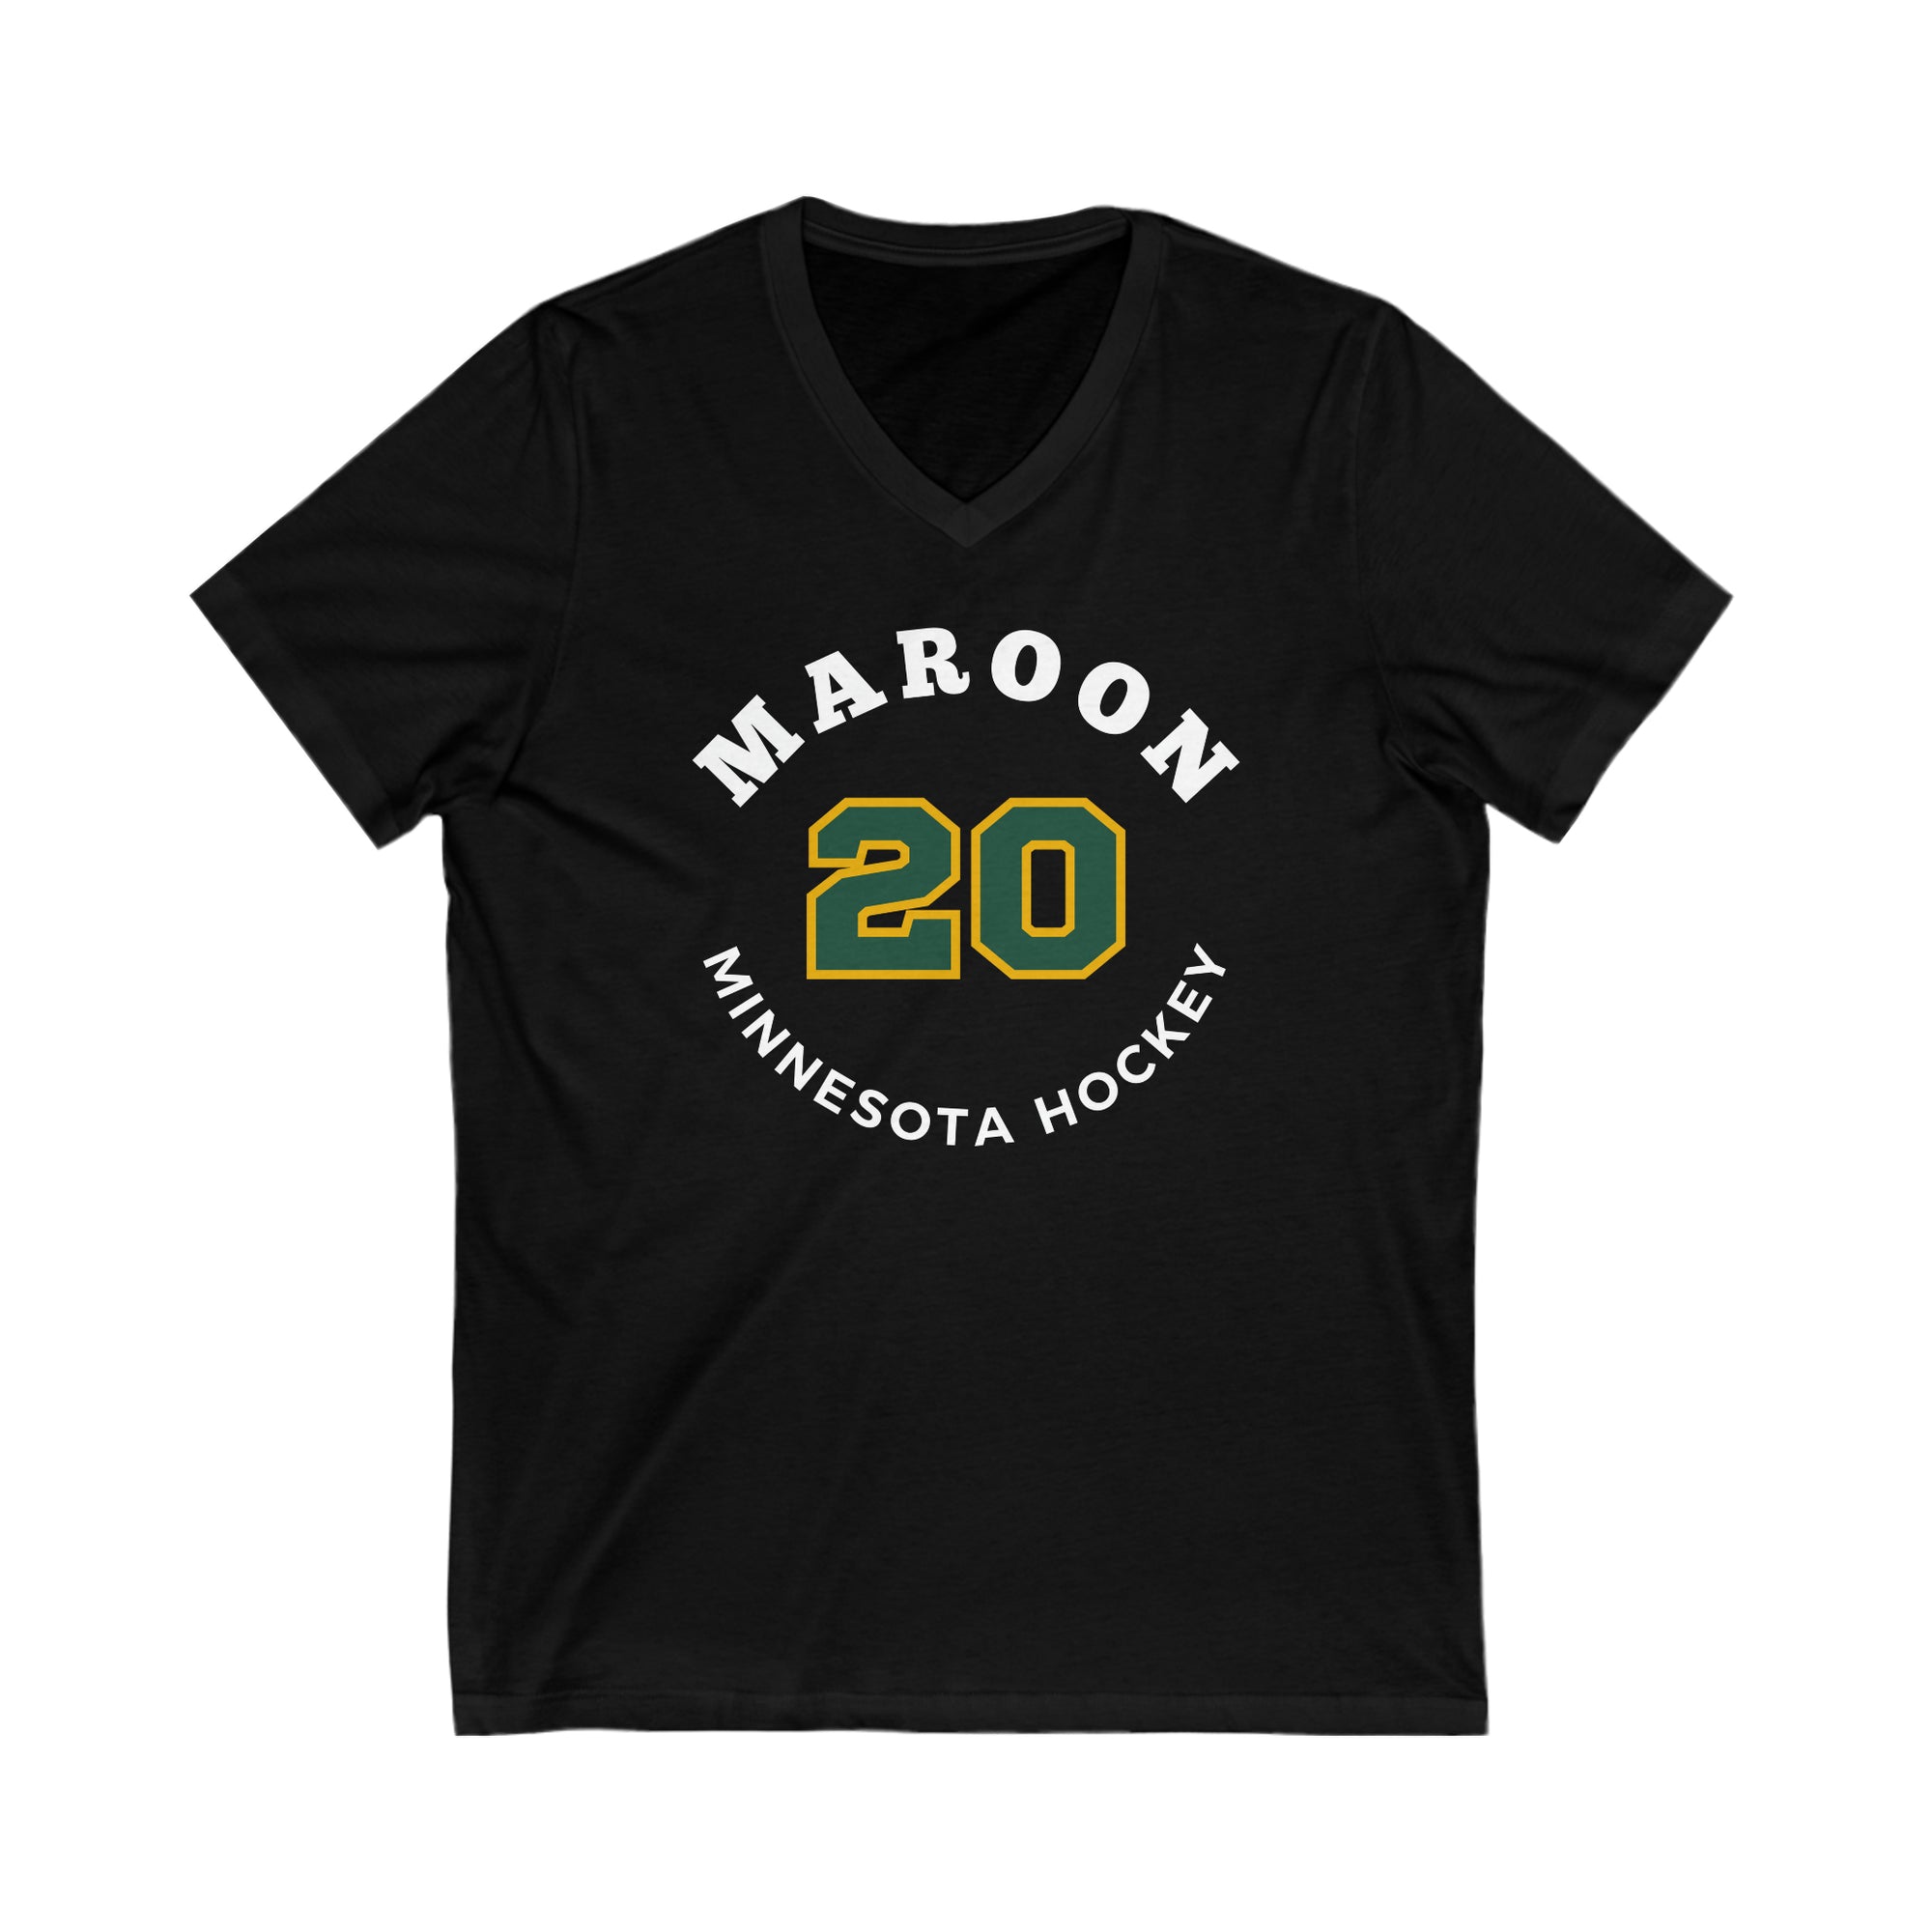 Maroon 20 Minnesota Hockey Number Arch Design Unisex V-Neck Tee